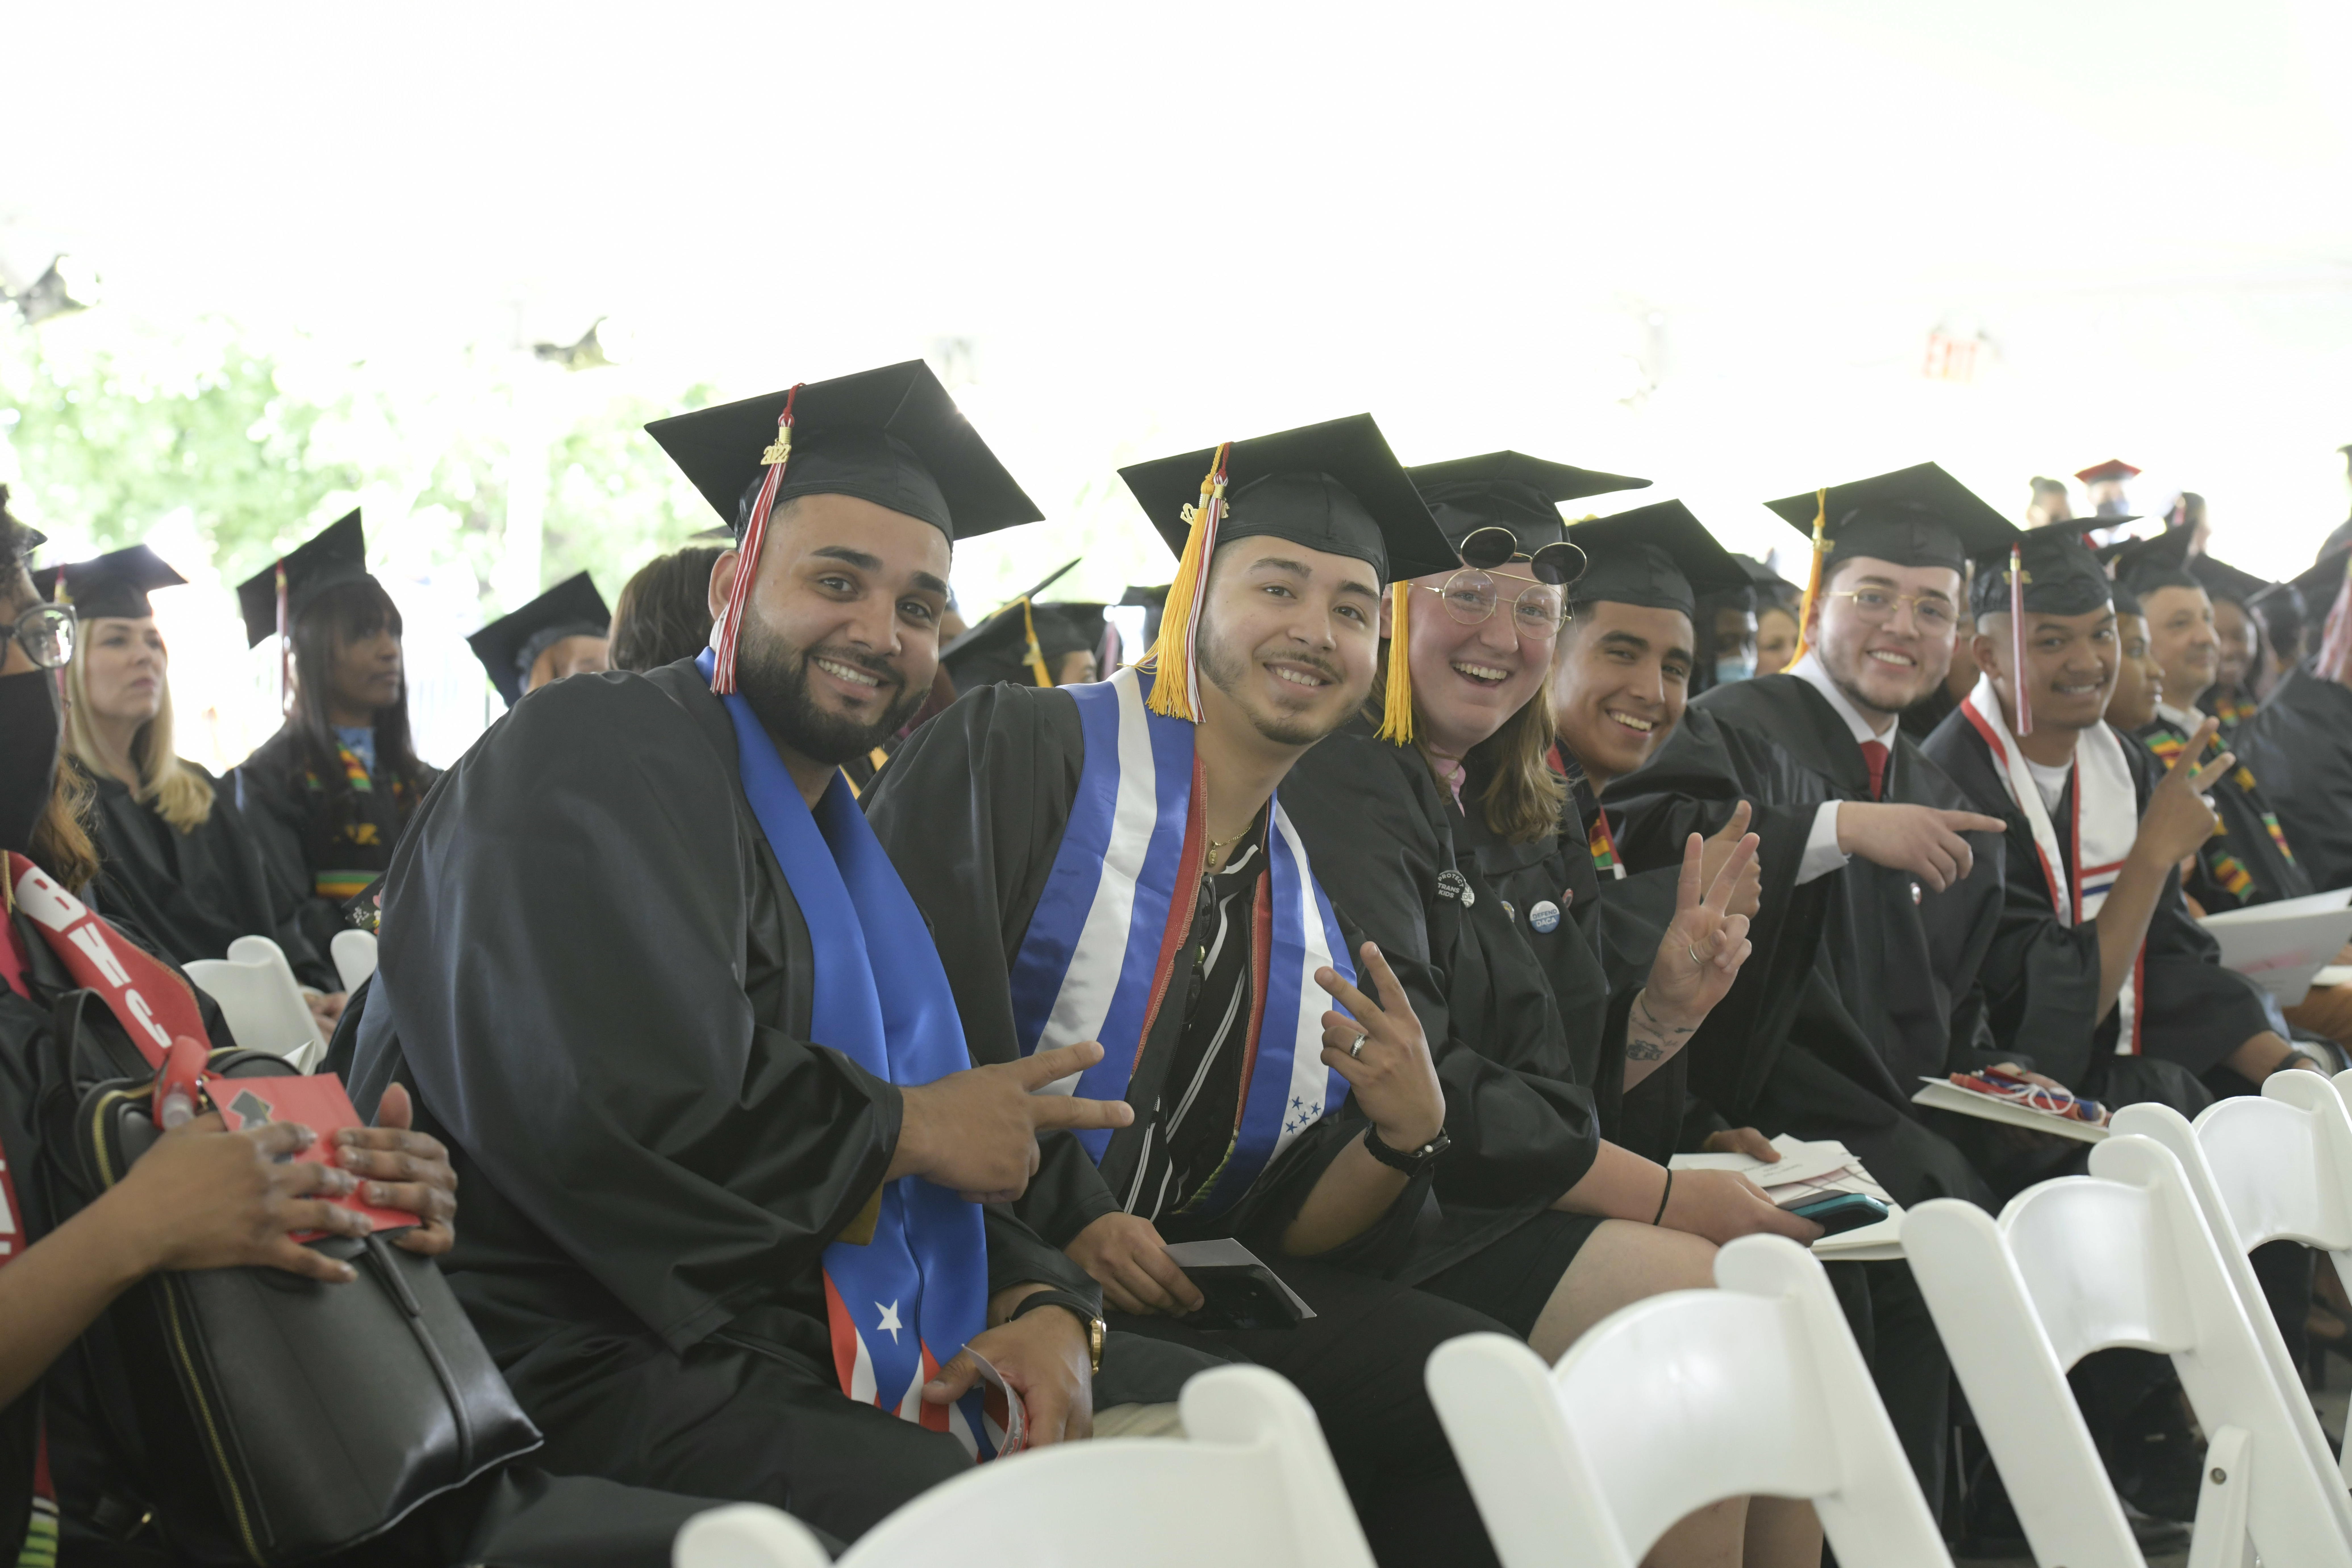 Graduating students posing